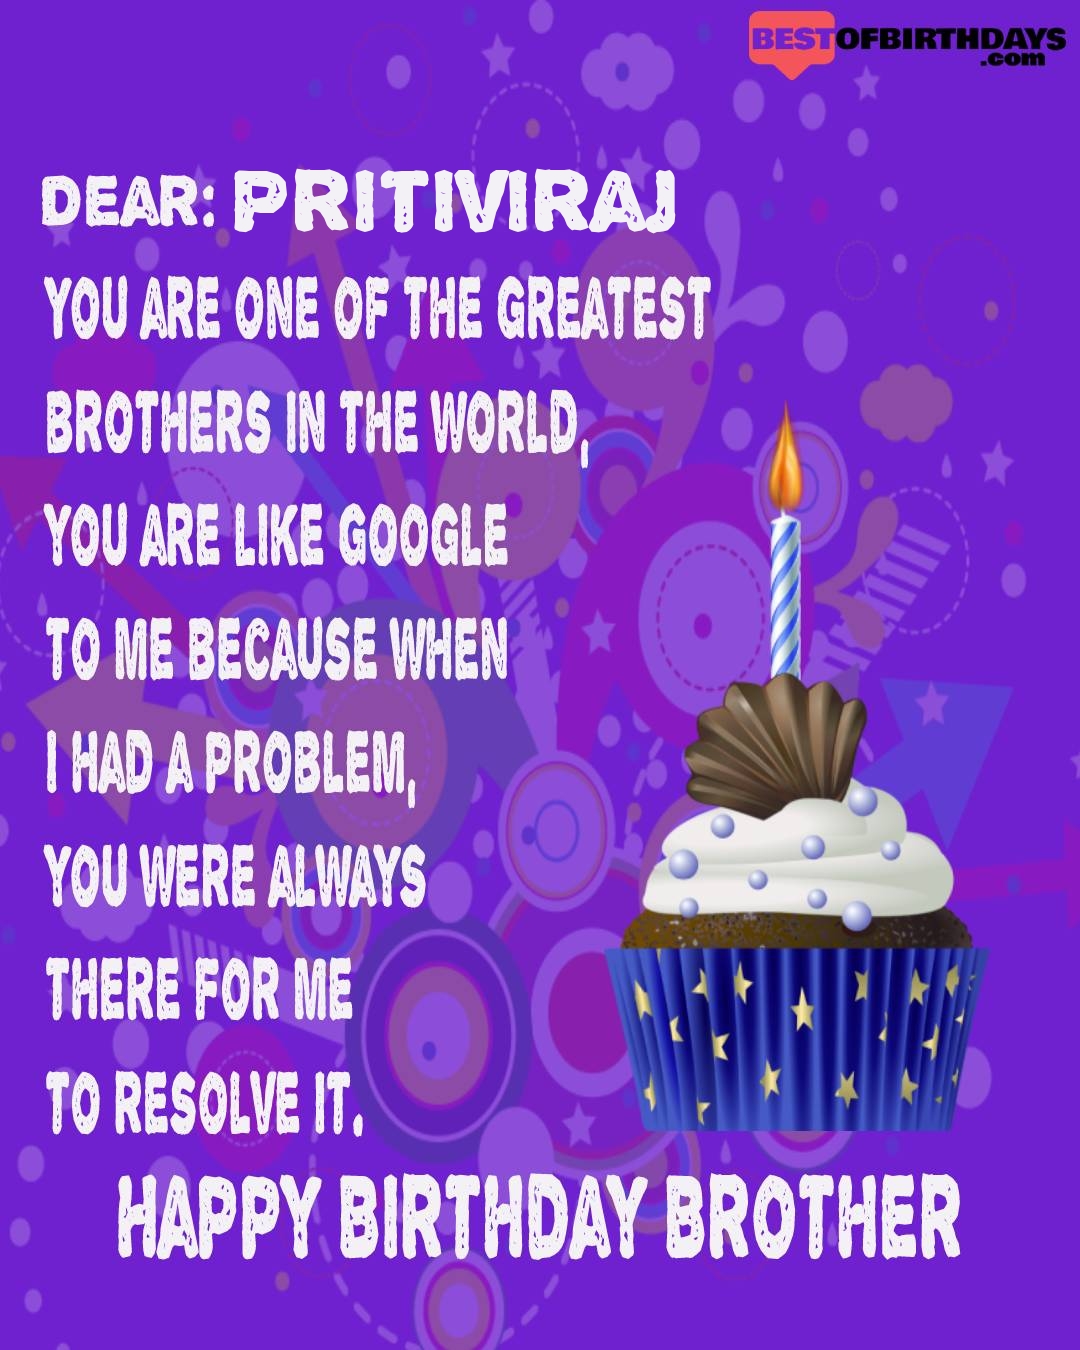 Happy birthday pritiviraj bhai brother bro